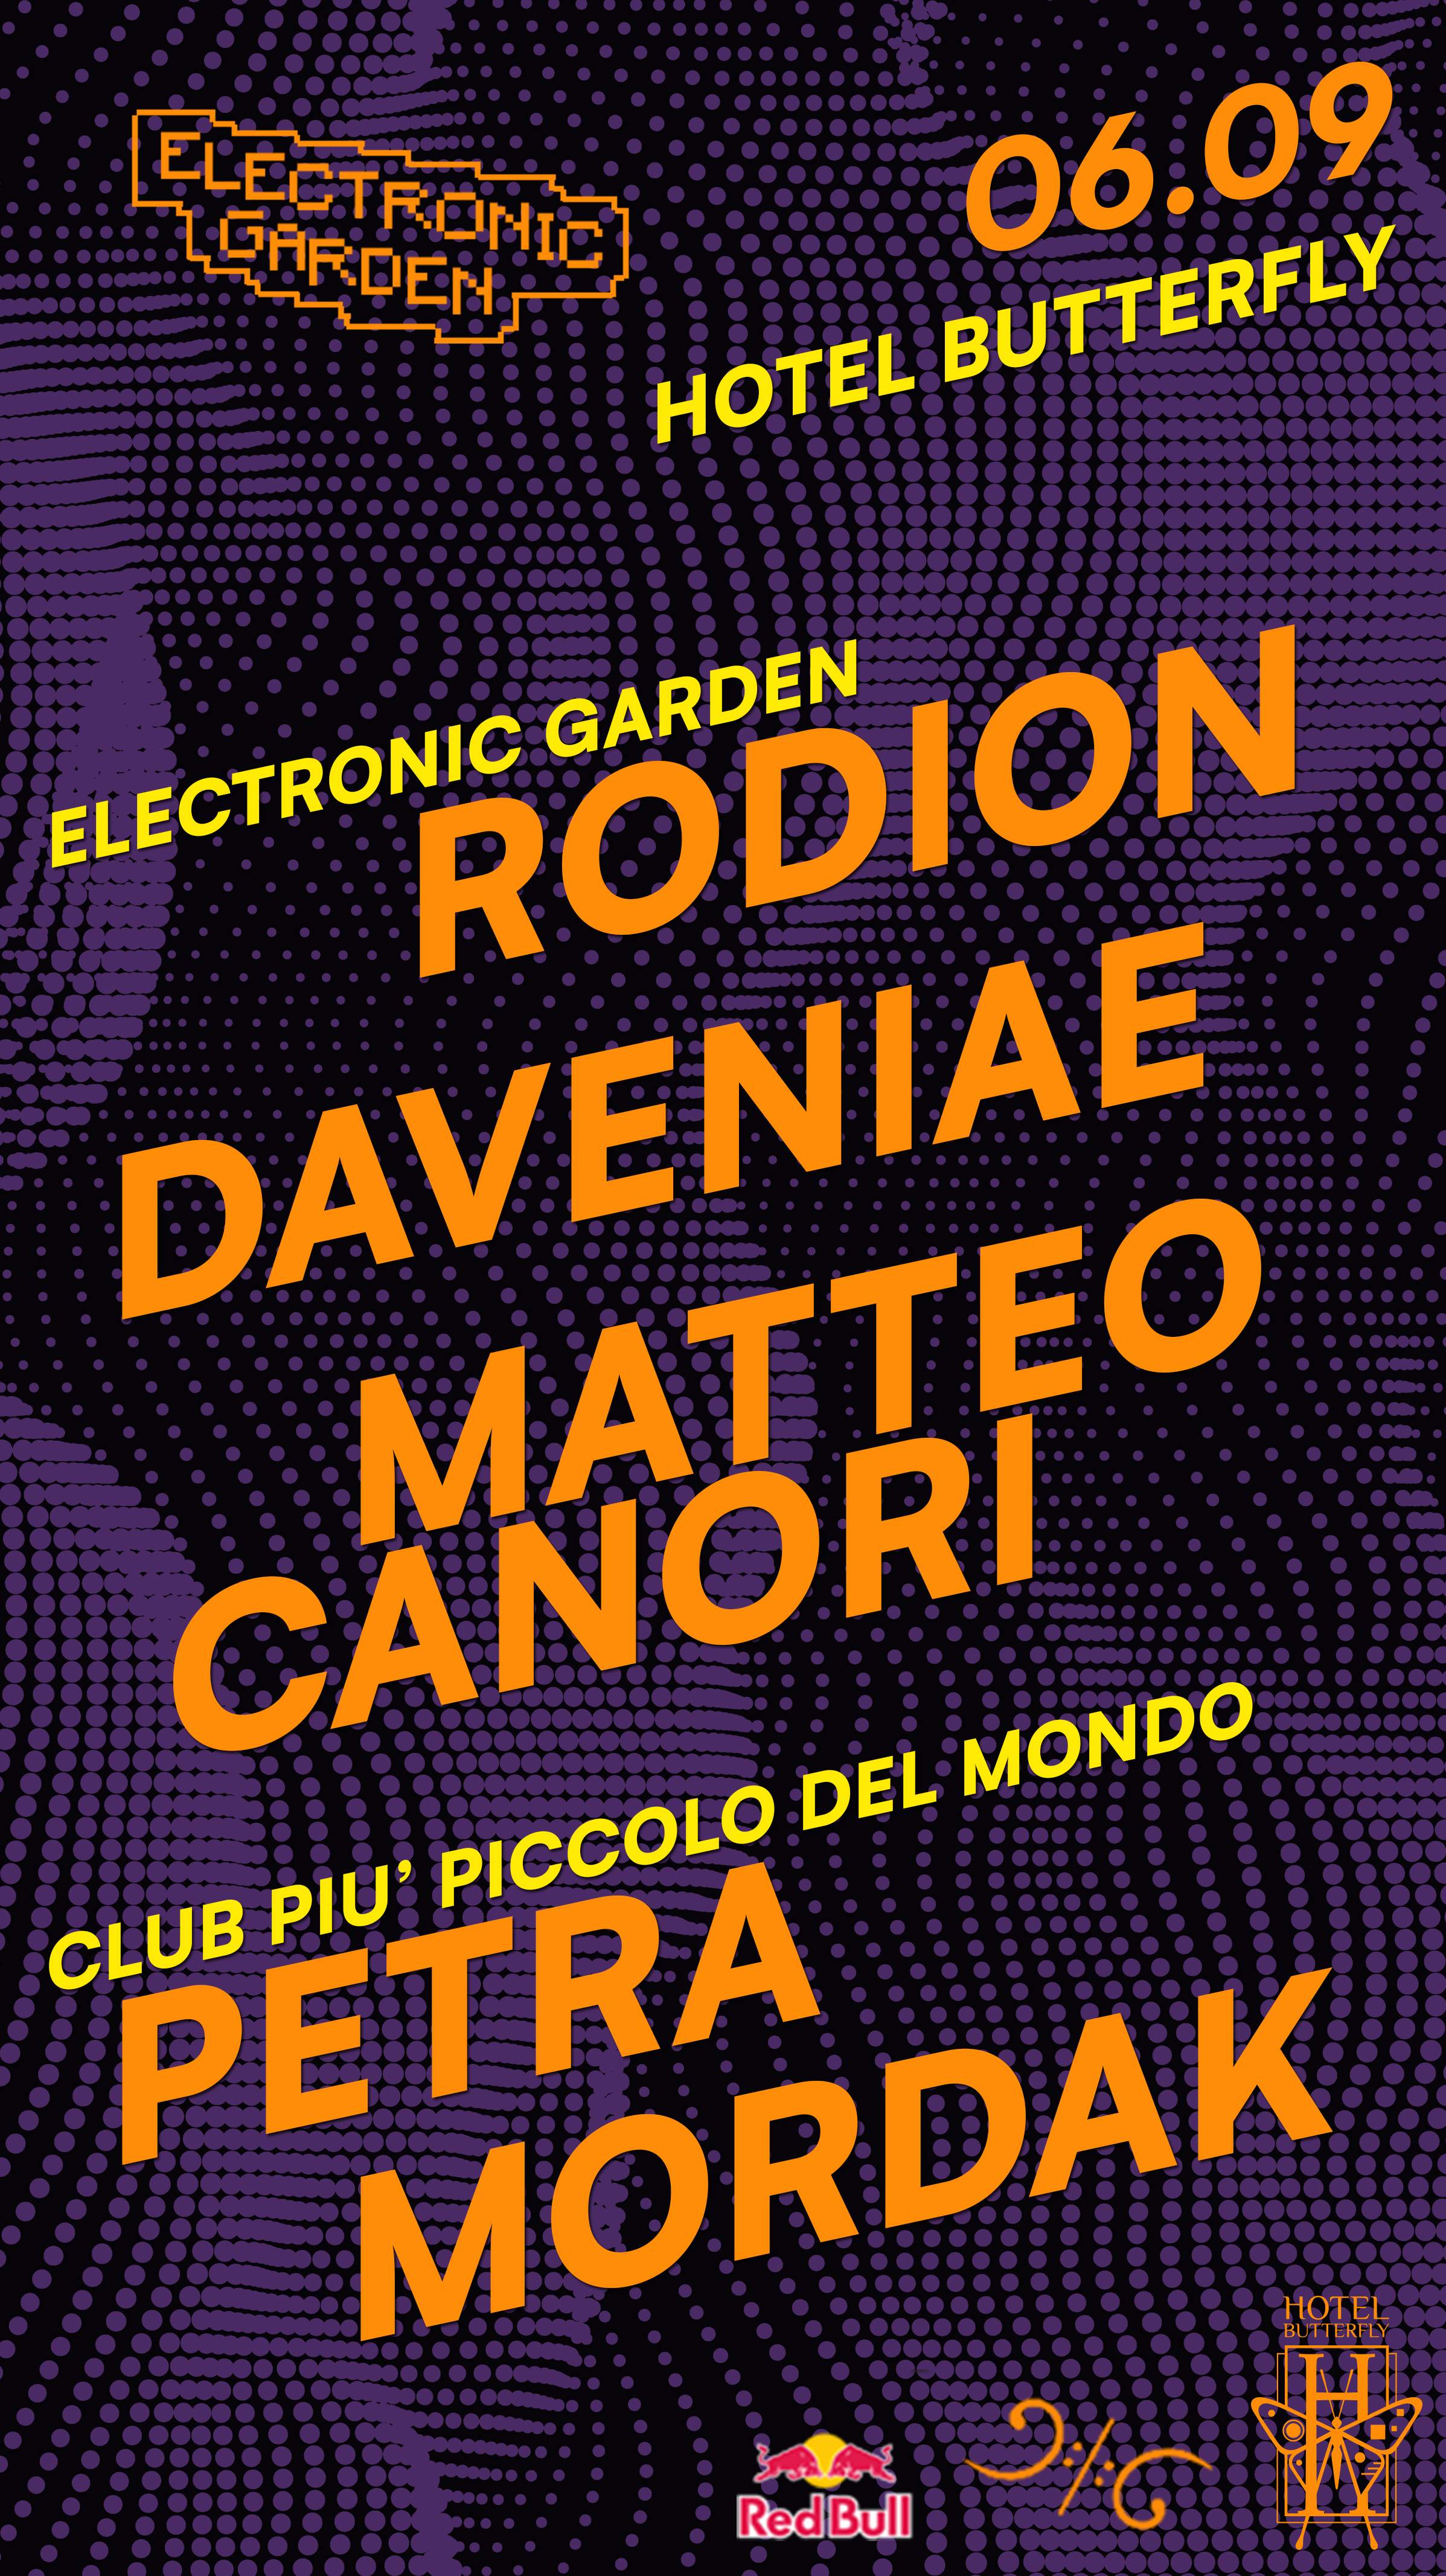 Electronic Garden: Rodion, Daveniae, Matteo Canori, Petra & Mordak - Página frontal